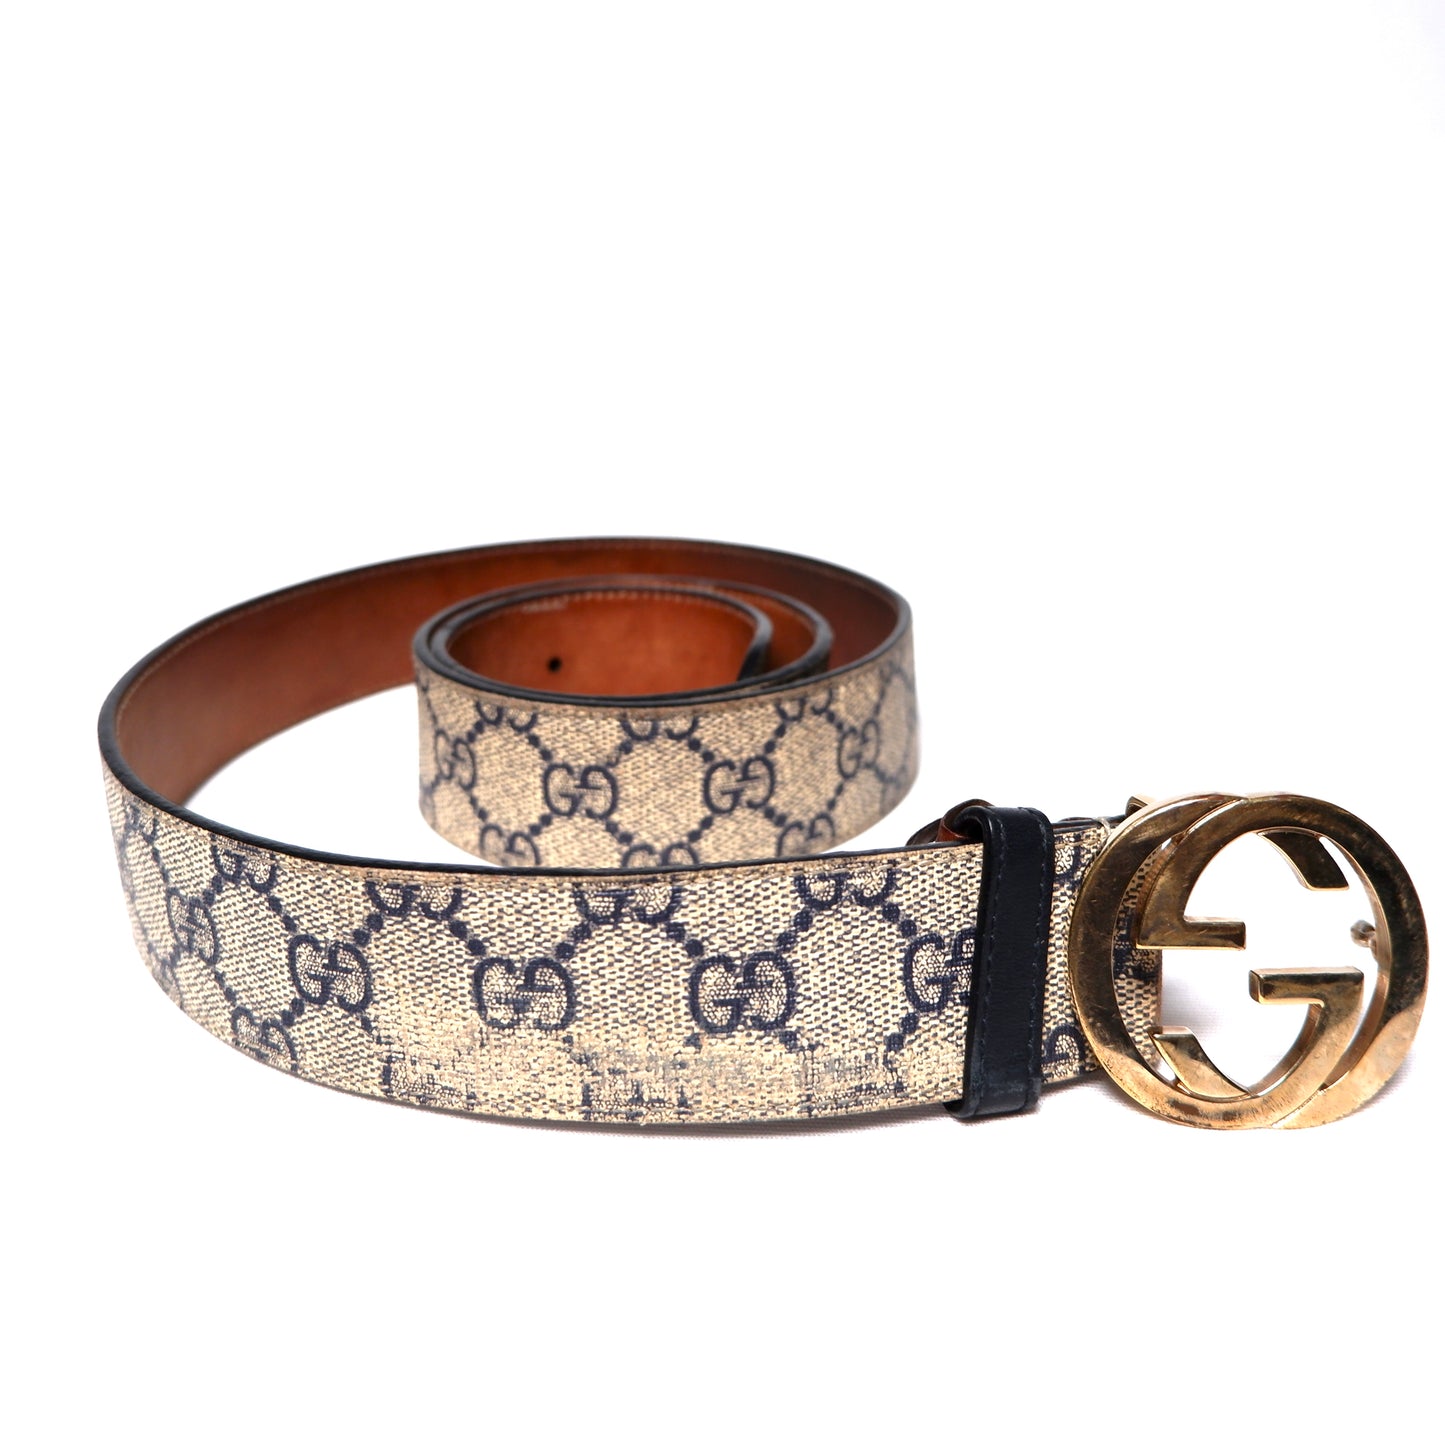 Gucci GG Monogram Canvas Belt - Size 95